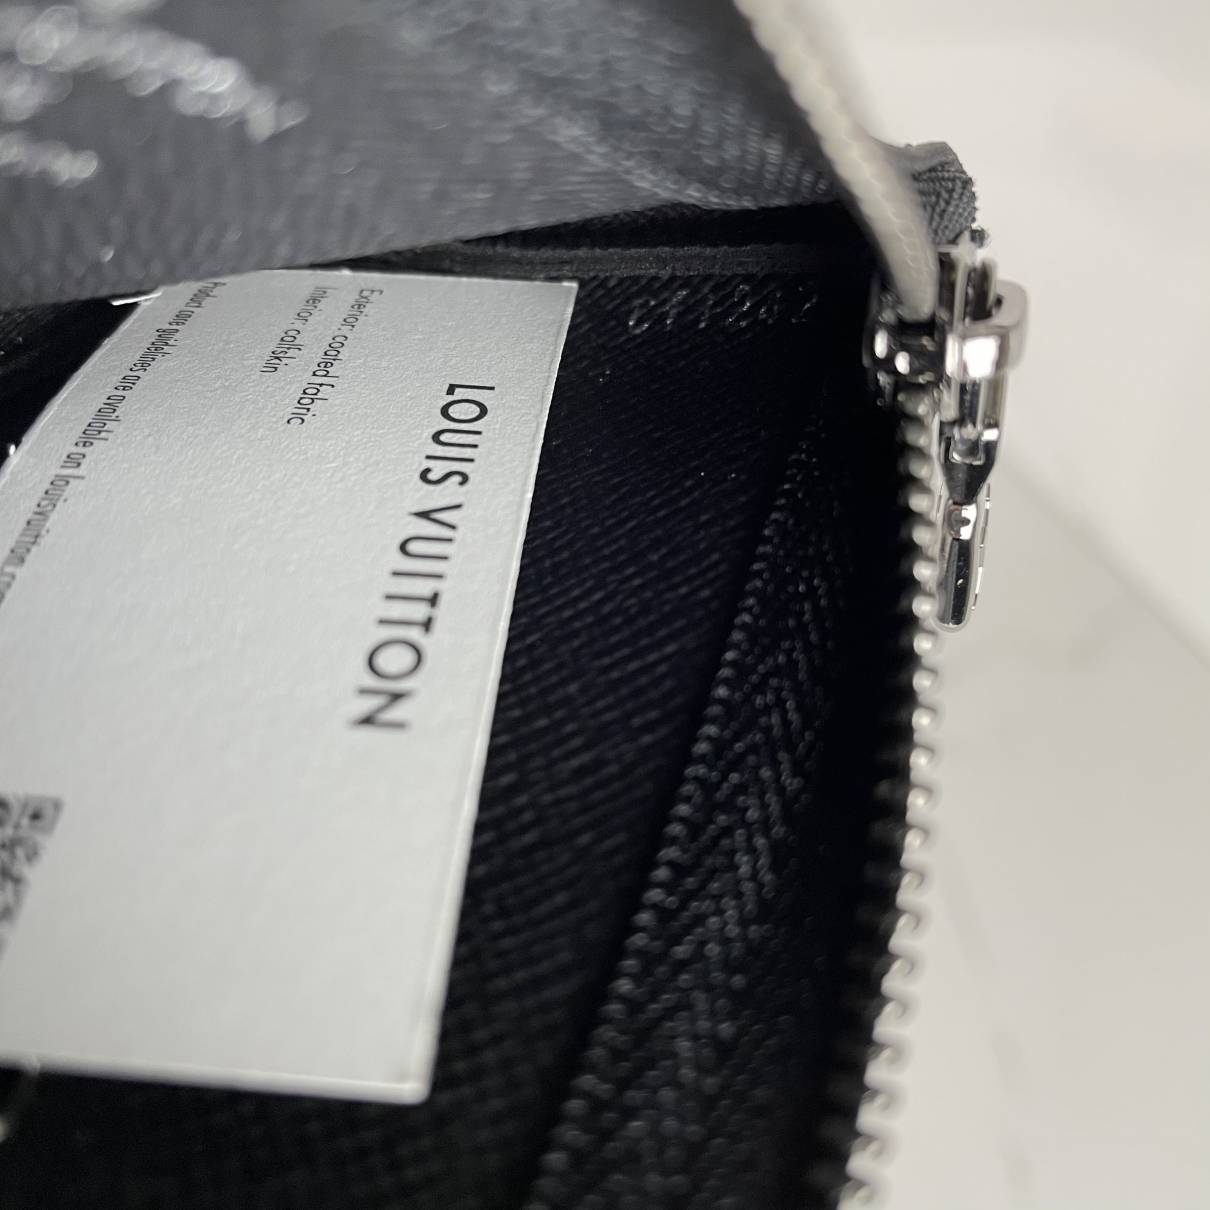 Key pouch cloth small bag Louis Vuitton Black in Cloth - 34888249